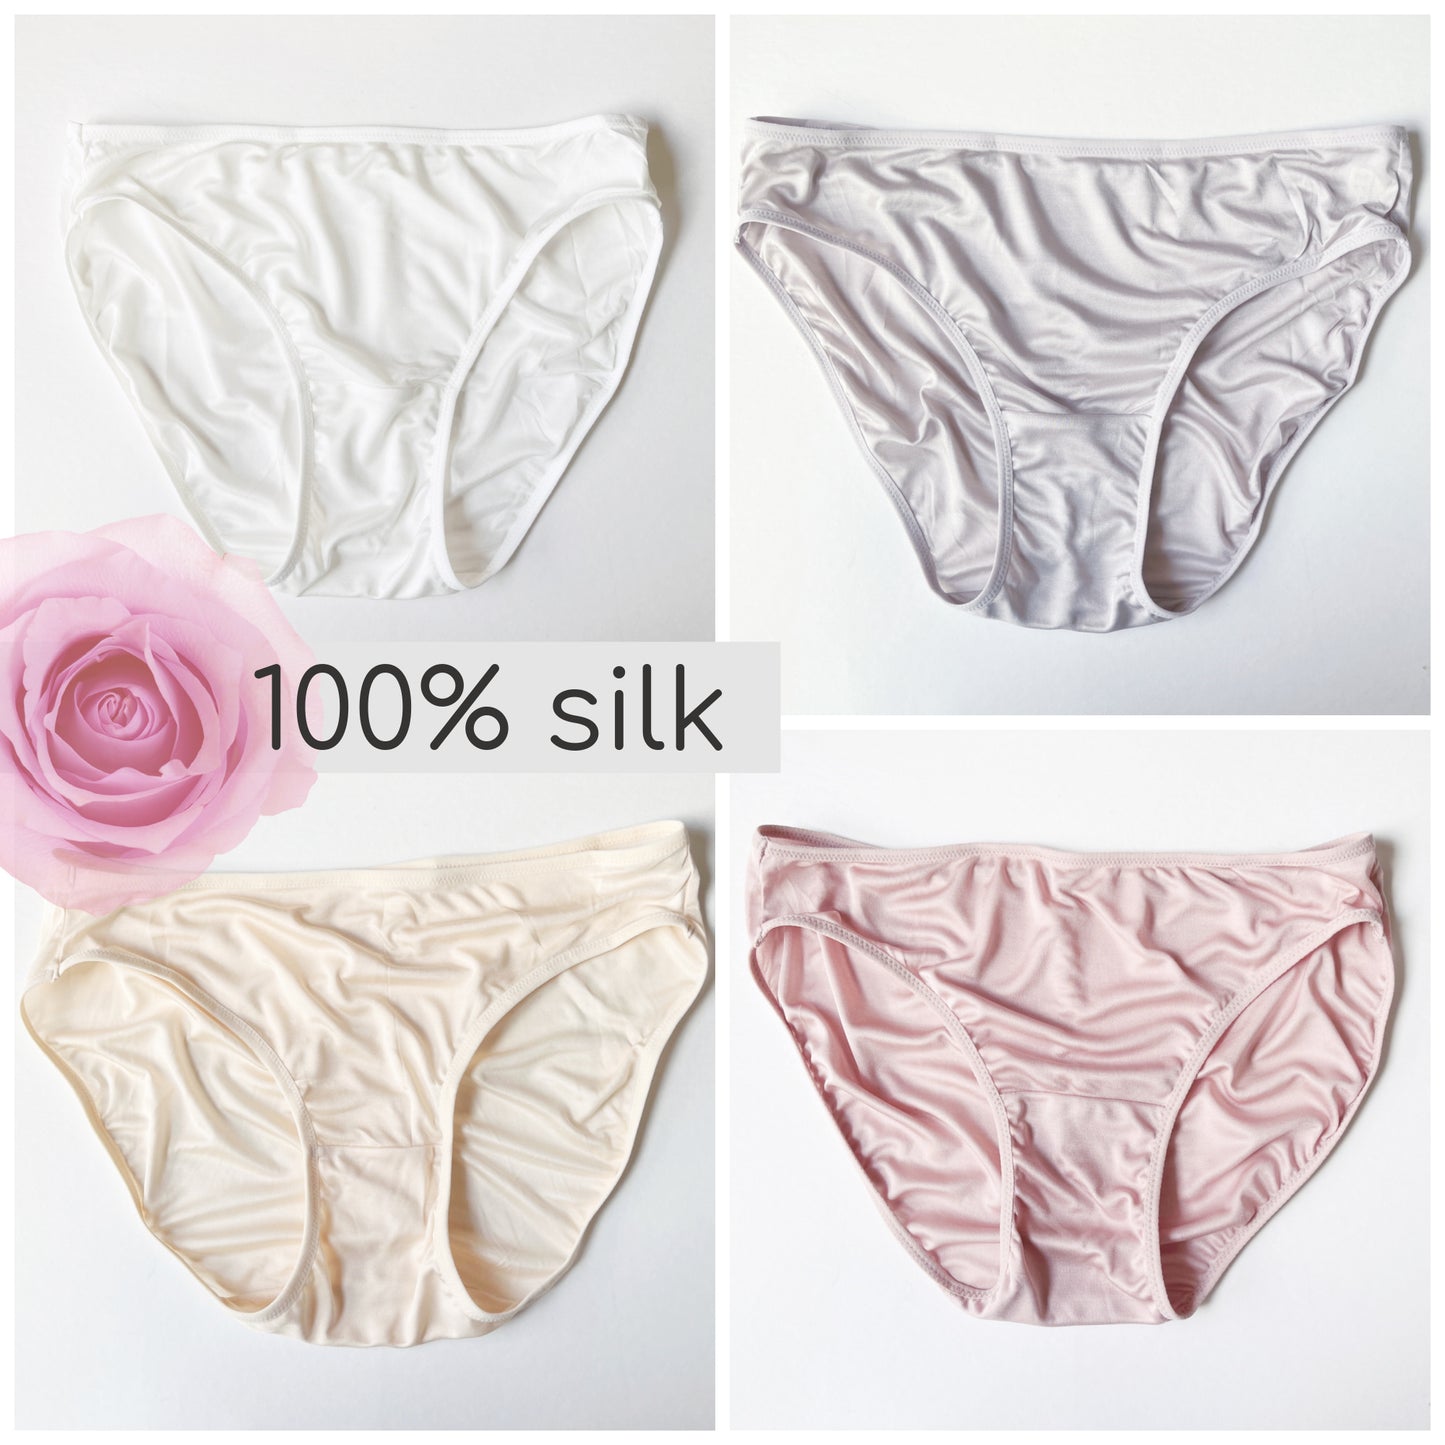 4 PACK 100% Pure Silk Women's Full Coverage Panties Underwear Lingerie  Boyshorts M L XL 2XL SS001